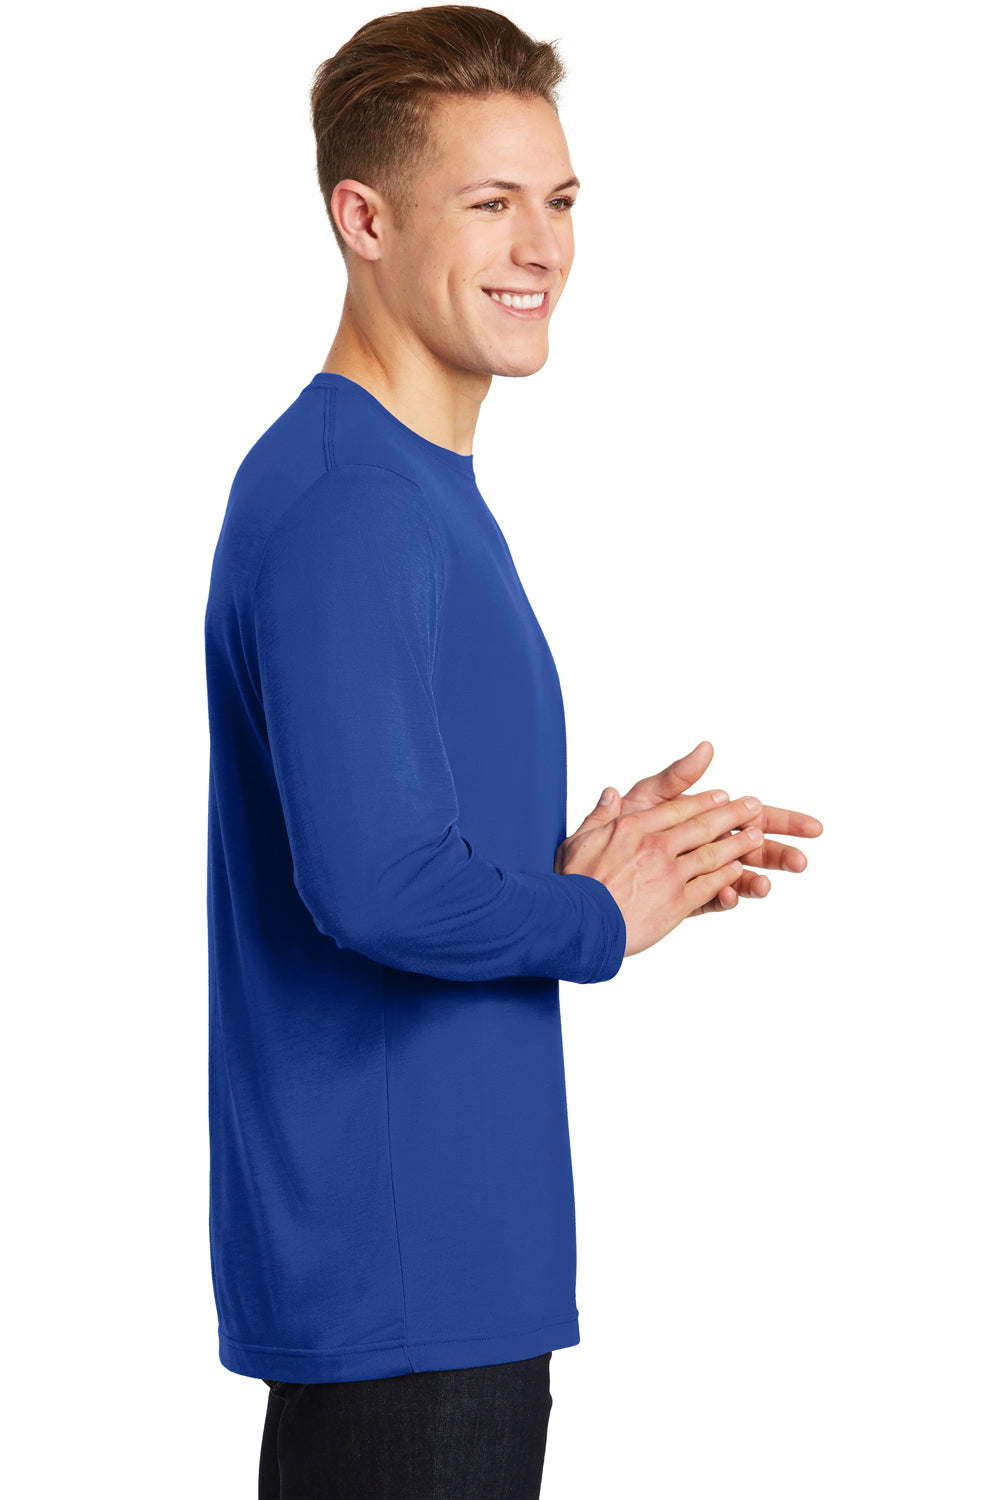 Sport-Tek ST450LS Mens Competitor Moisture Wicking Long Sleeve Crewneck T-Shirt Royal Blue Side